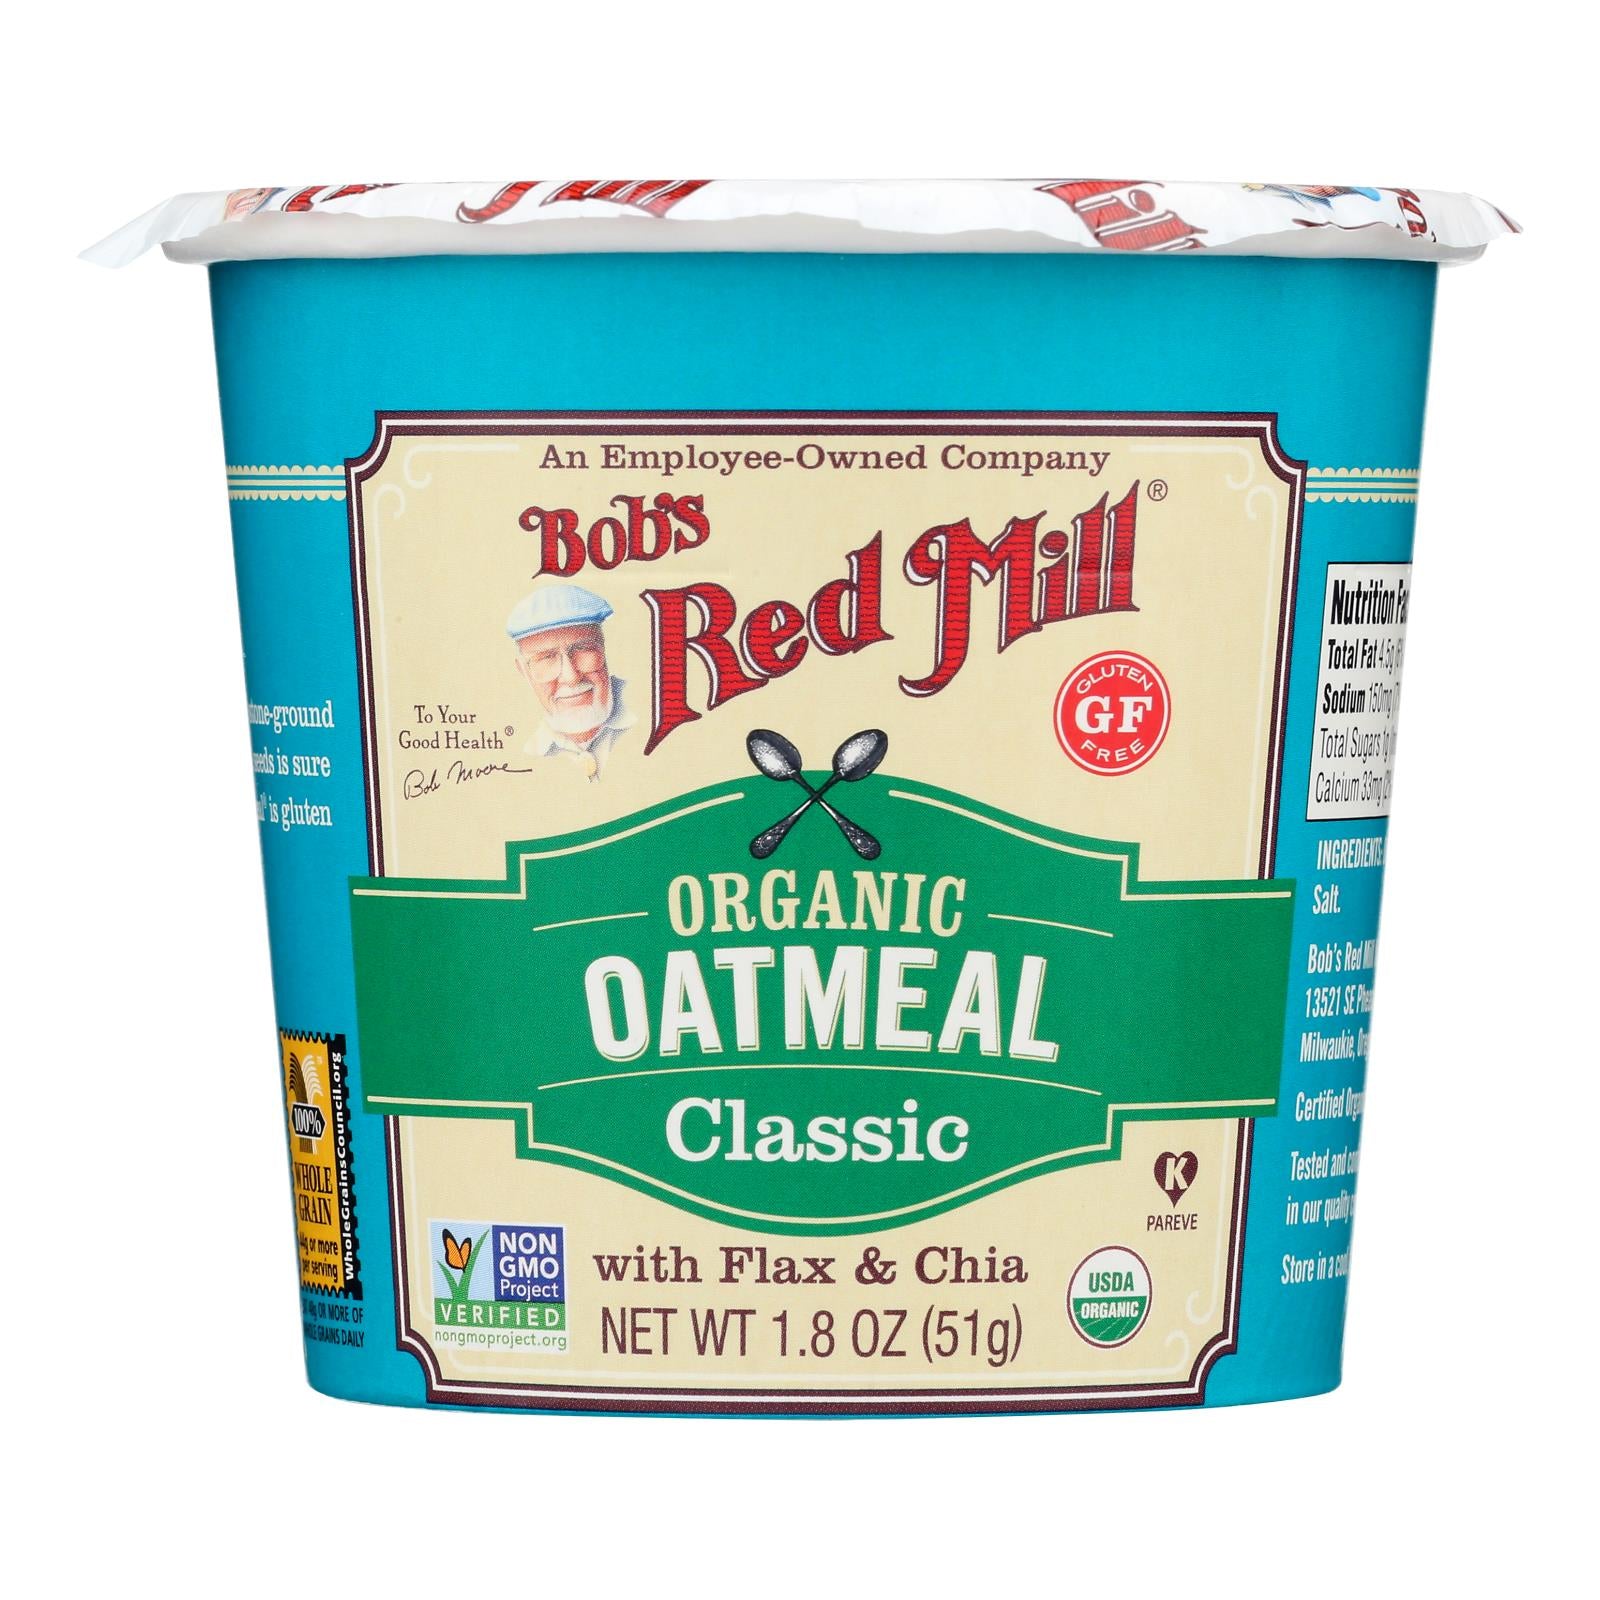 Bob's Red Mill - Oatmeal - Organic - Cup - Classc - Gluten Free - Case Of 12 - 1.8 Oz